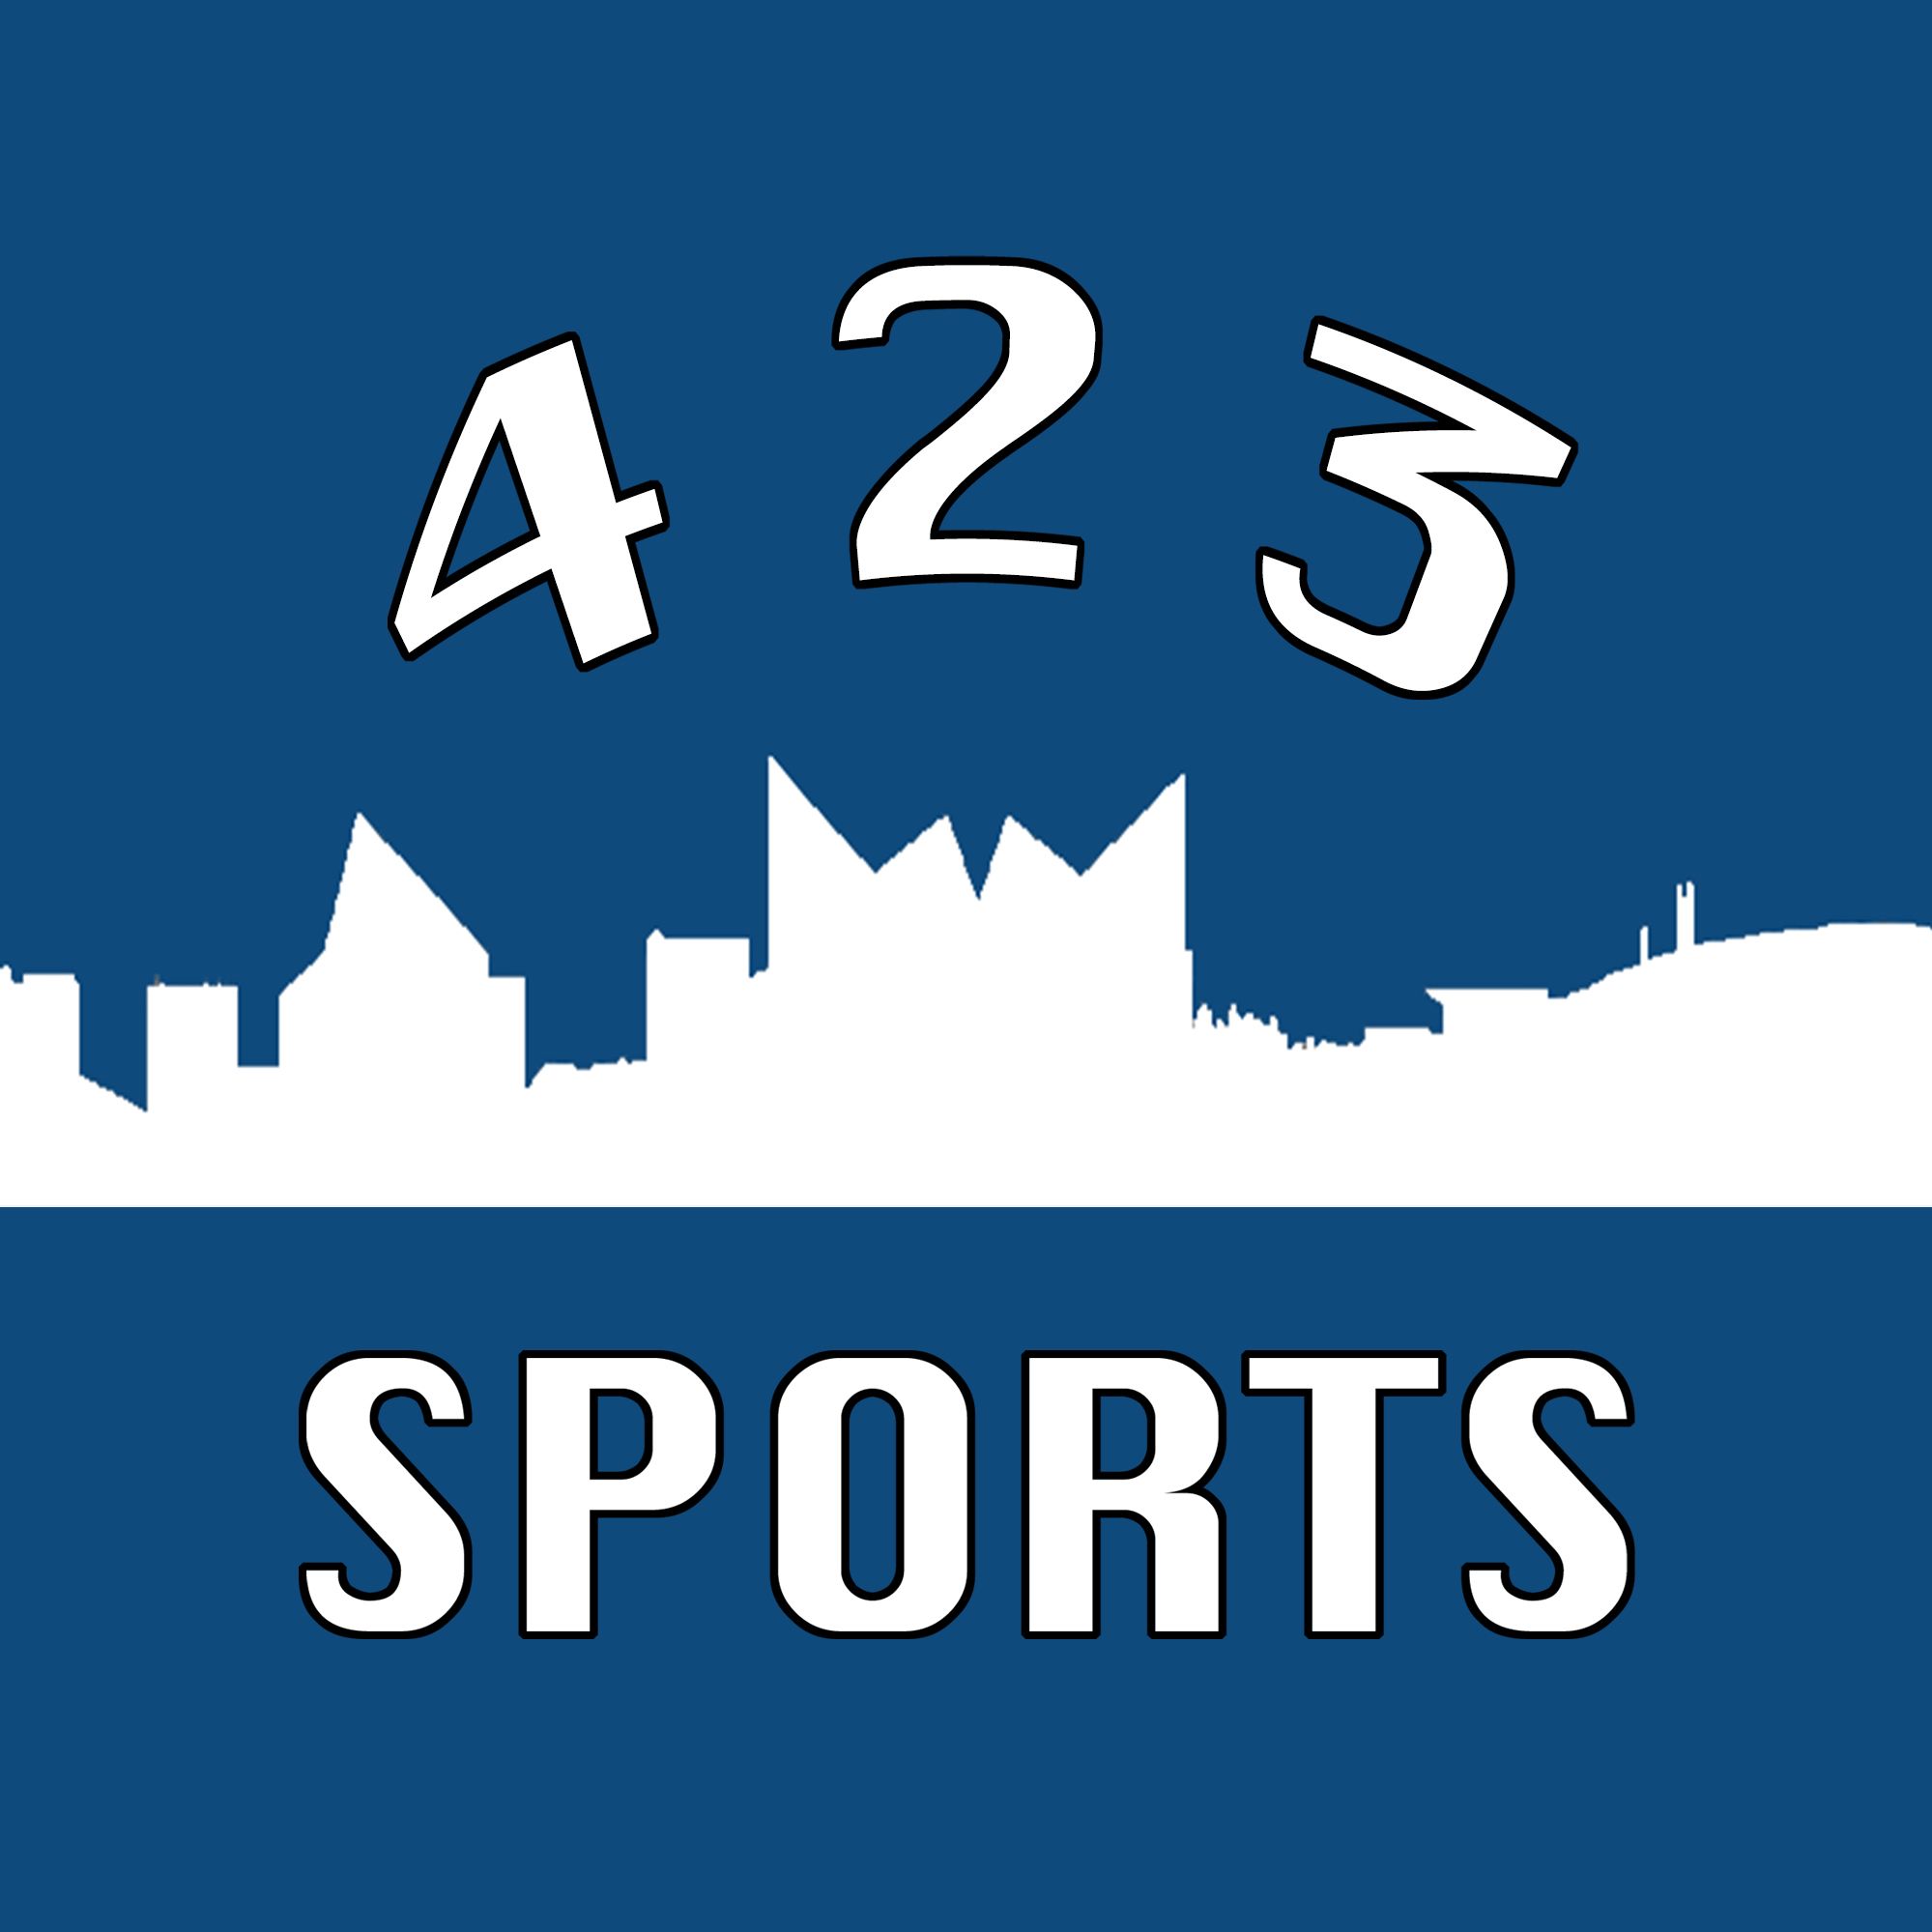 423 Sports Show: #1